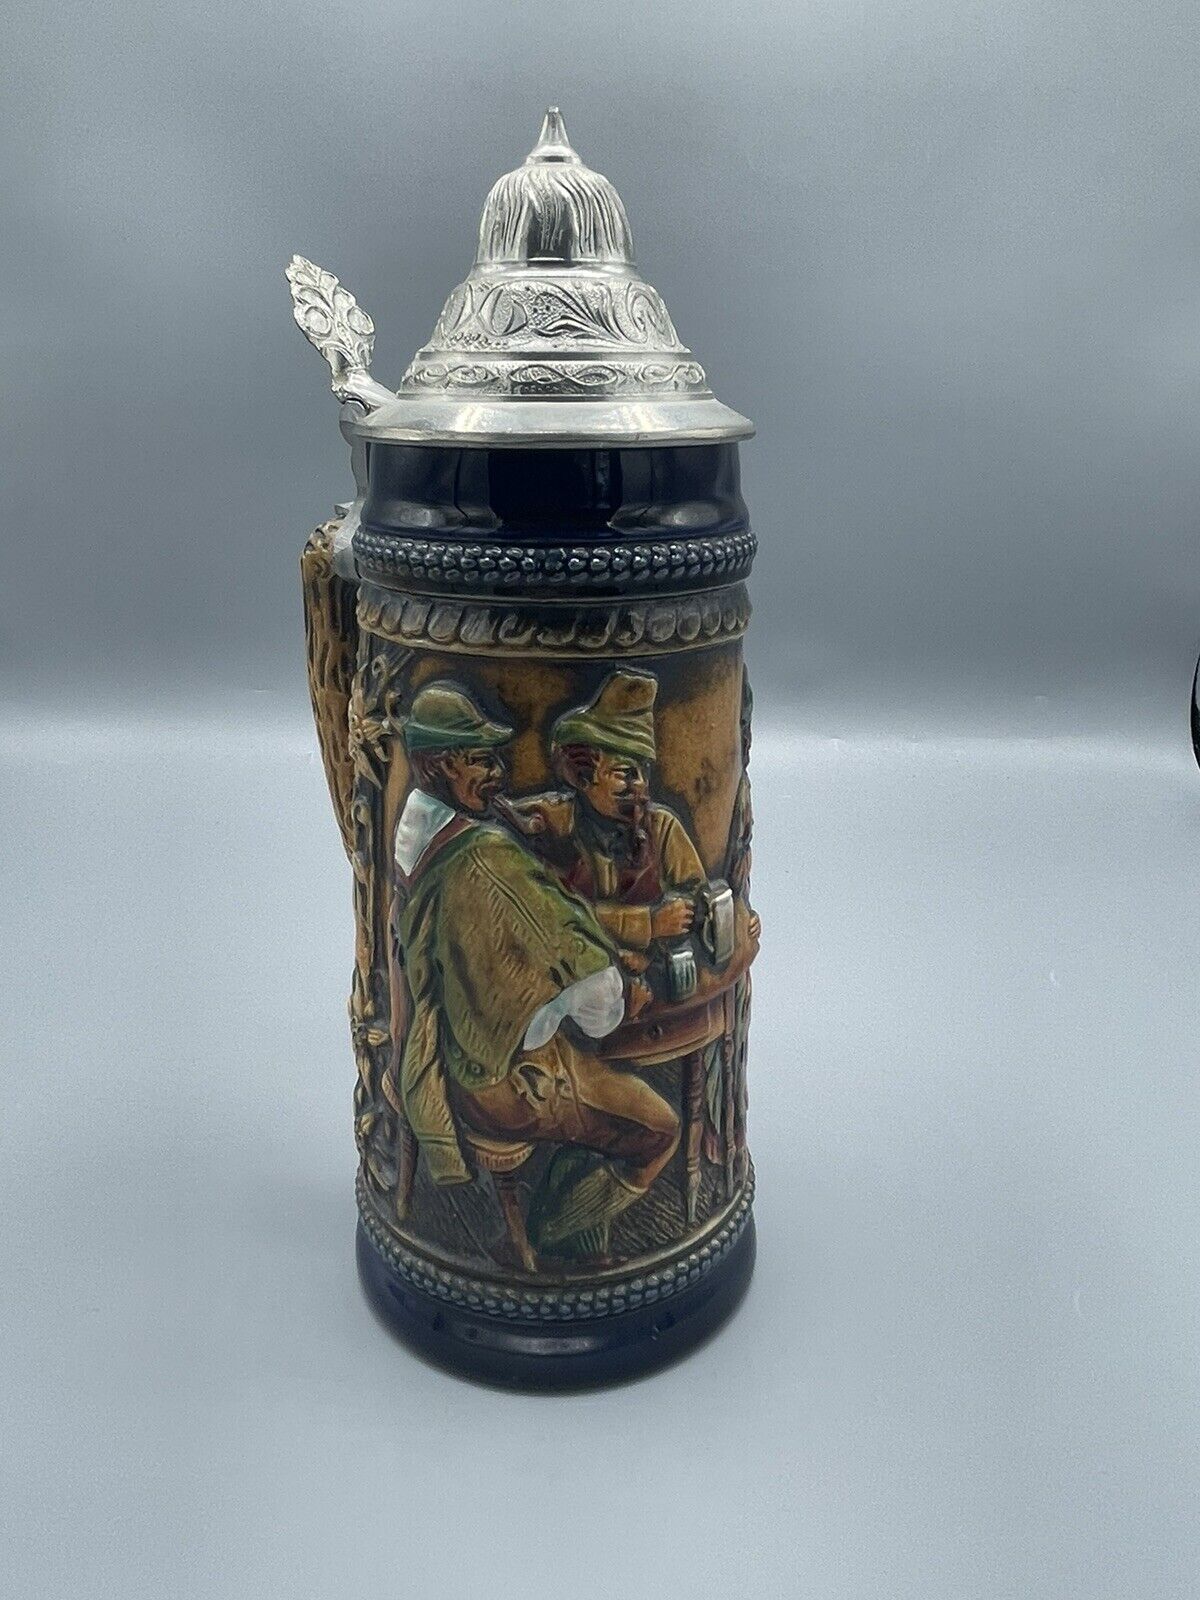 Vintage Collectible German Beer Stein Mug - BEAUTIFUL DETAILING.